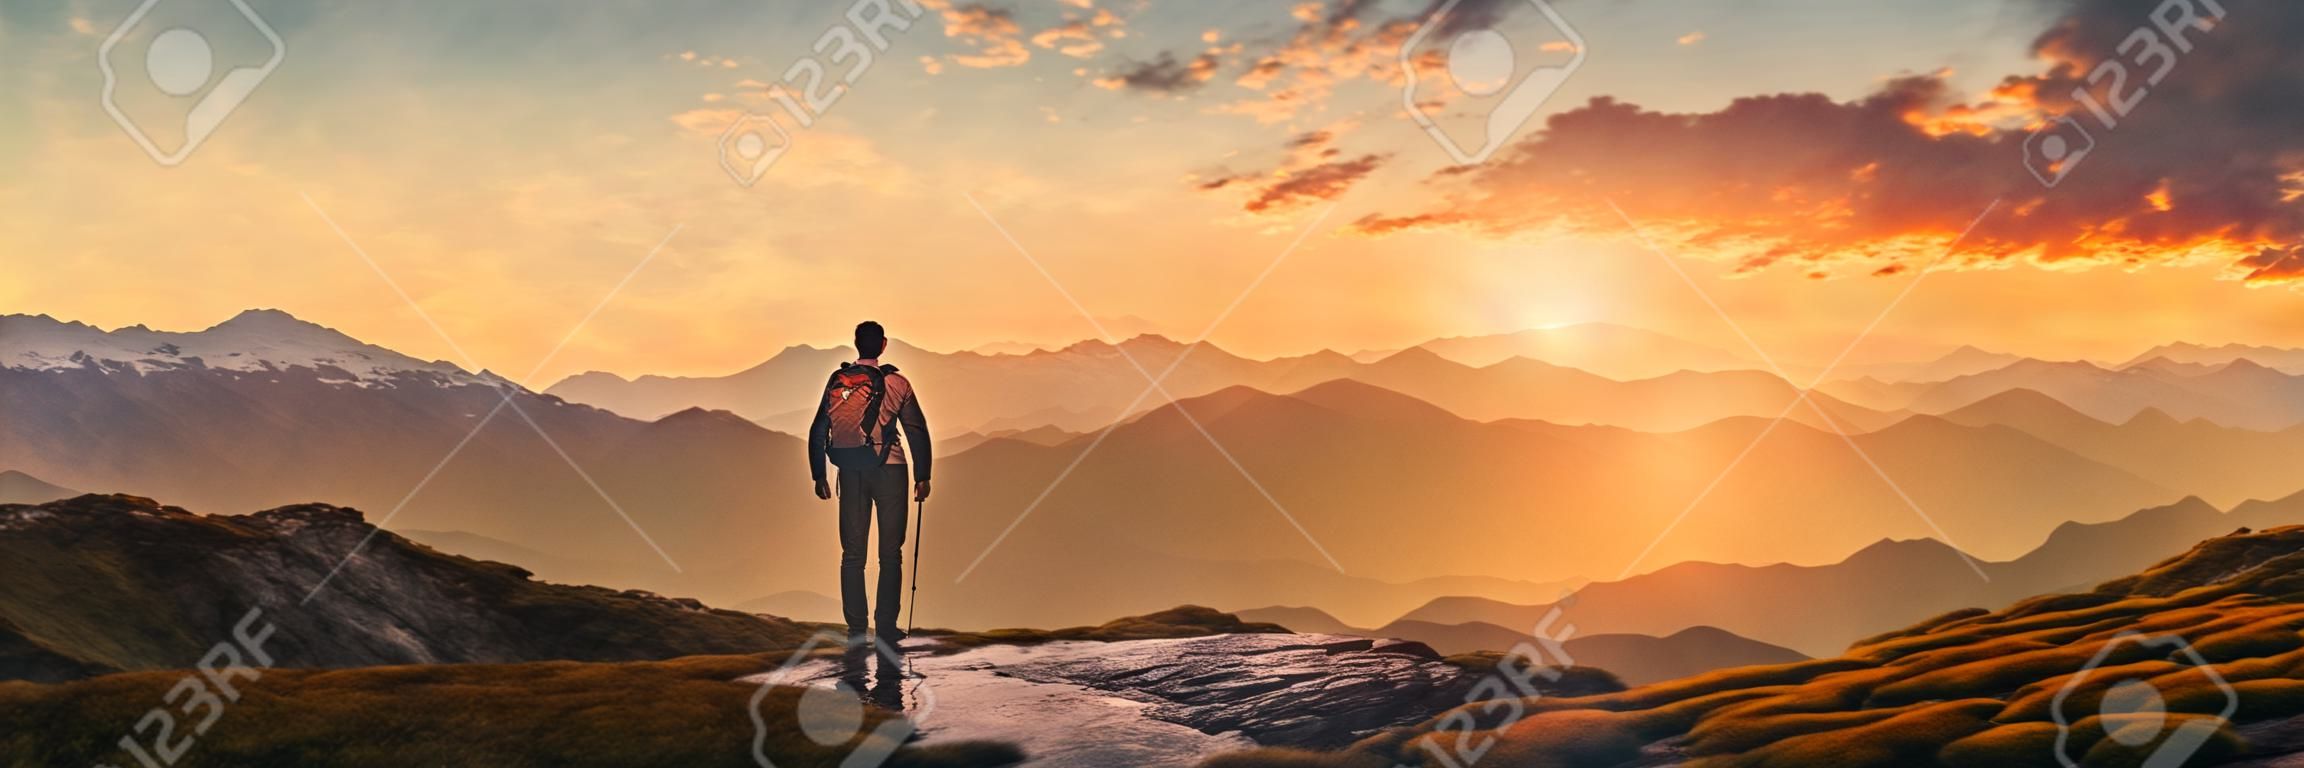 Viandante in montagna al tramonto vista panoramica